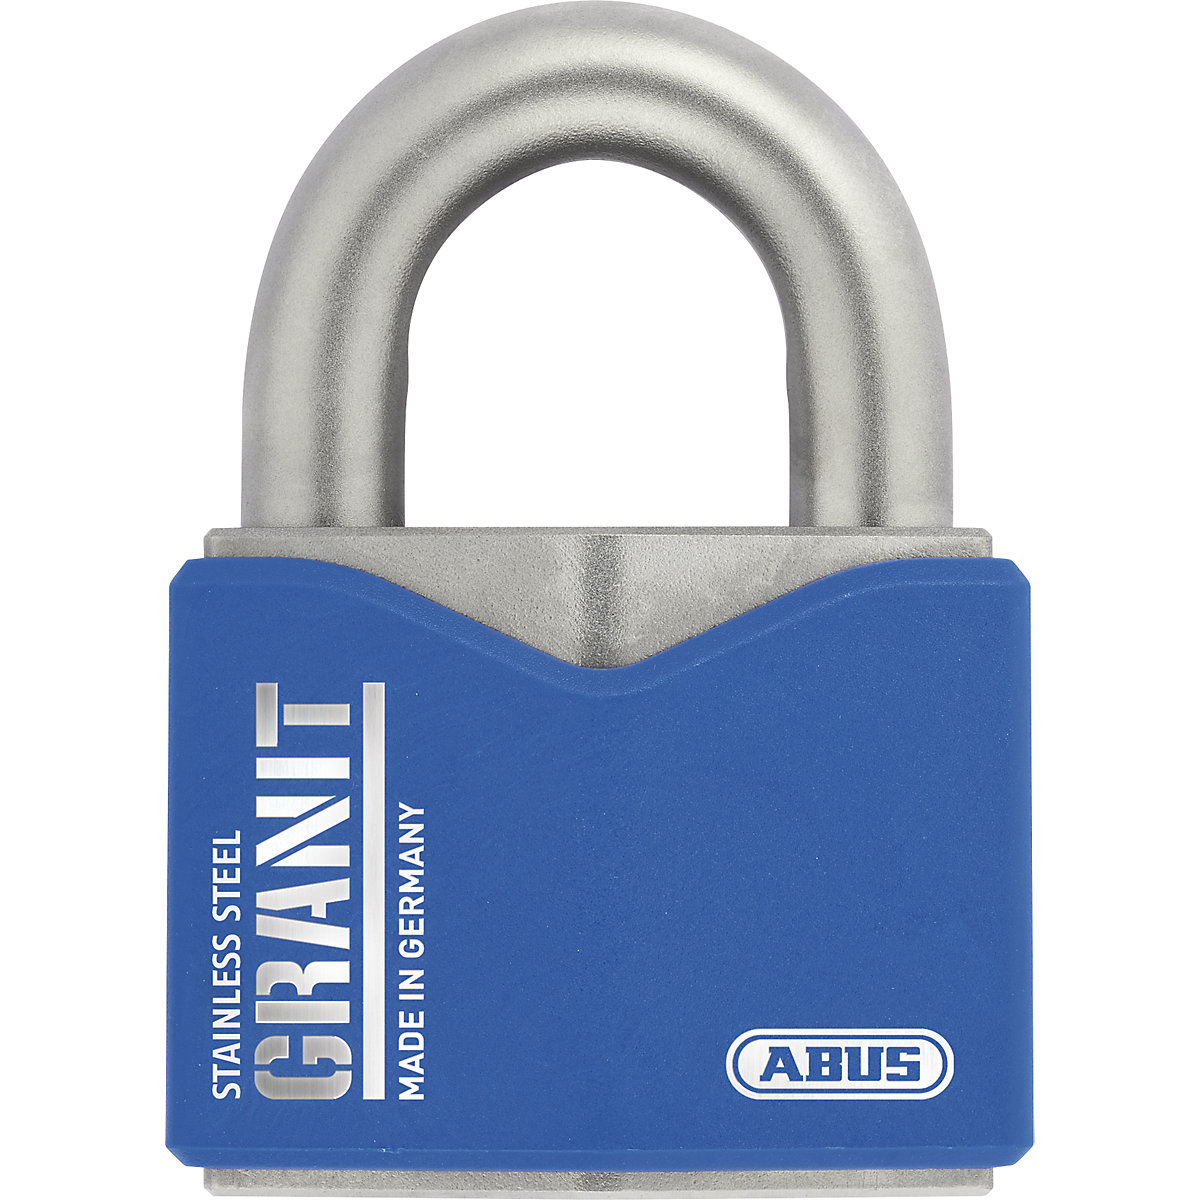 GRANIT™ padlock, stainless steel - ABUS